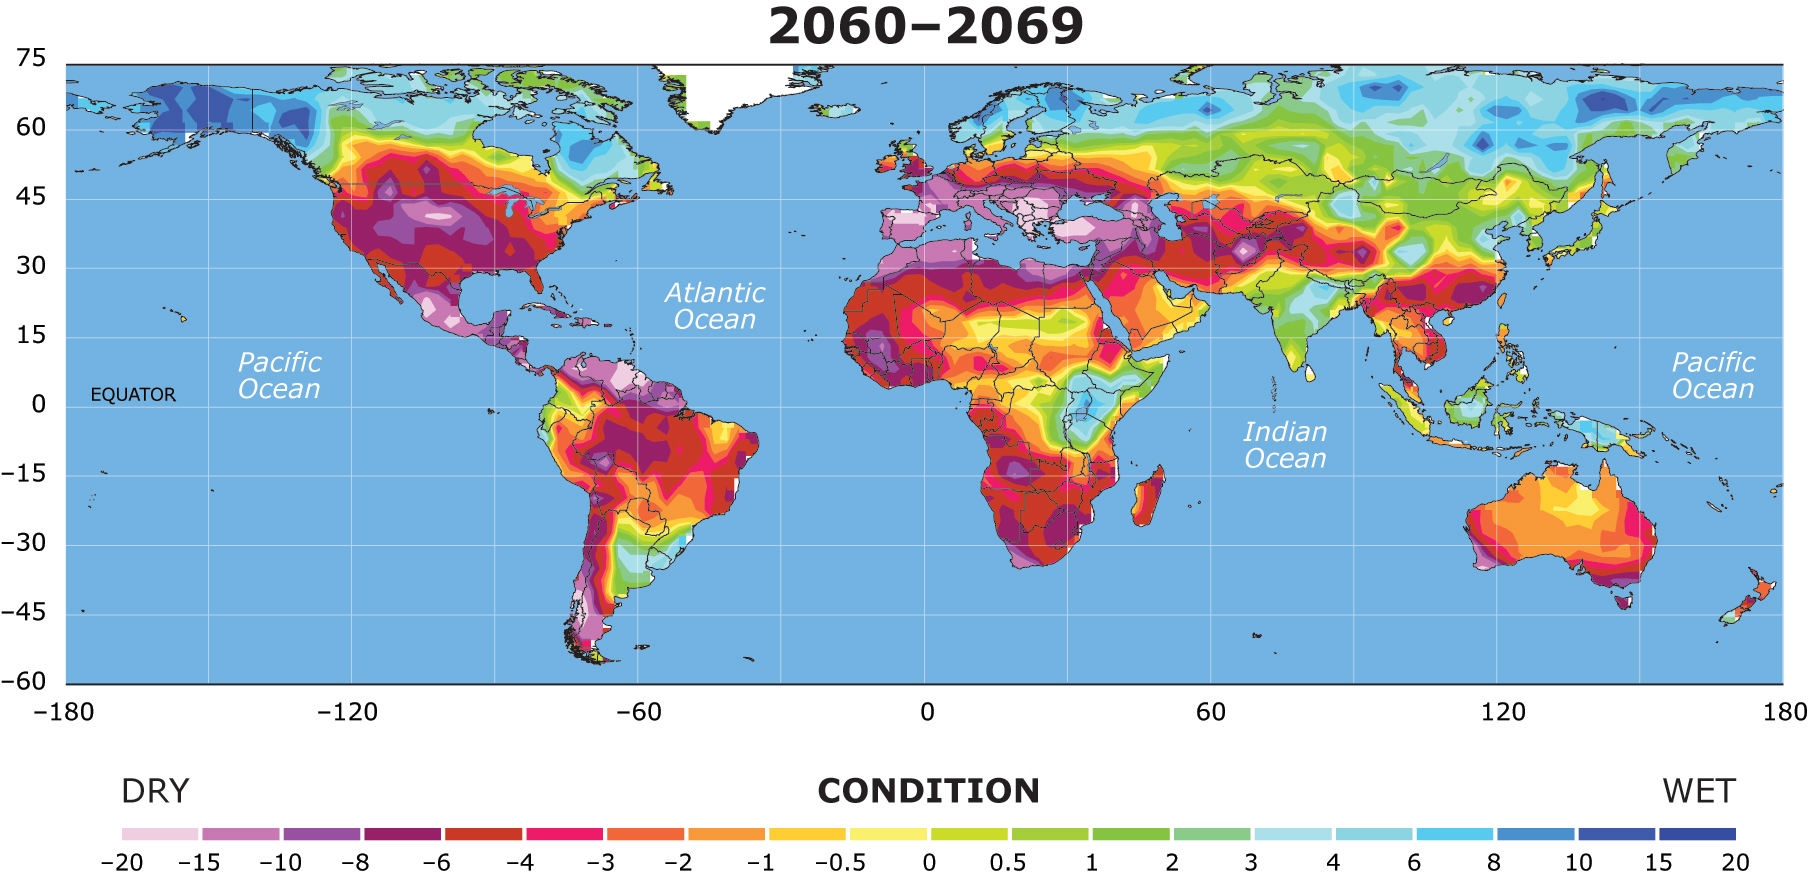 dai drought 2060-2069 wOceanLabels.jpg